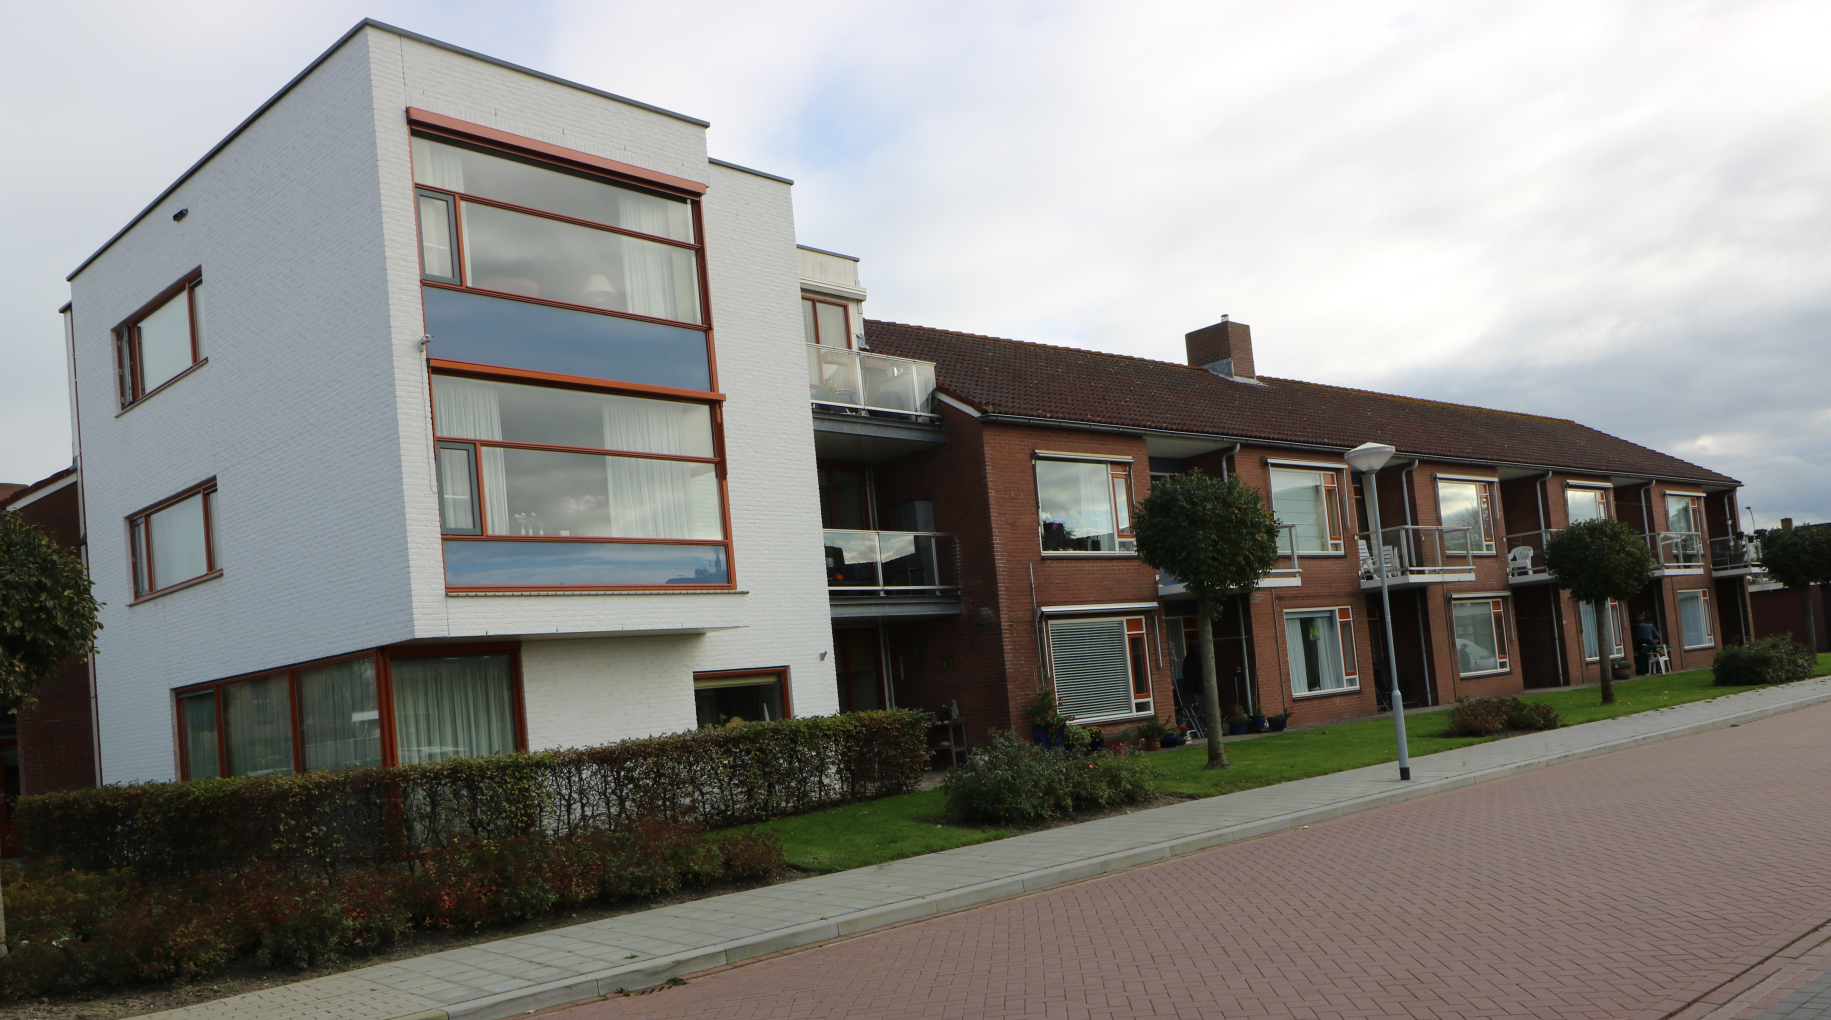 Gouwestraat 59, 4388 RA Oost-Souburg, Nederland